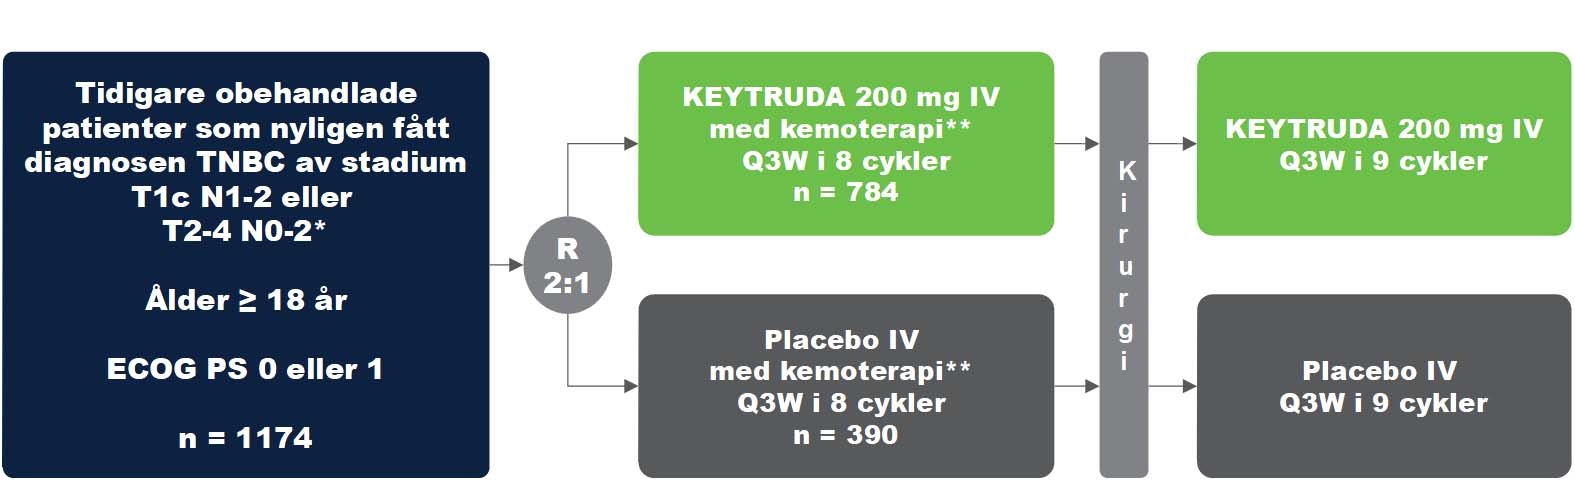 Keytruda - Indikation - Bröstcancer - Tidig TNBC - Studiedesign KEYNOTE-522